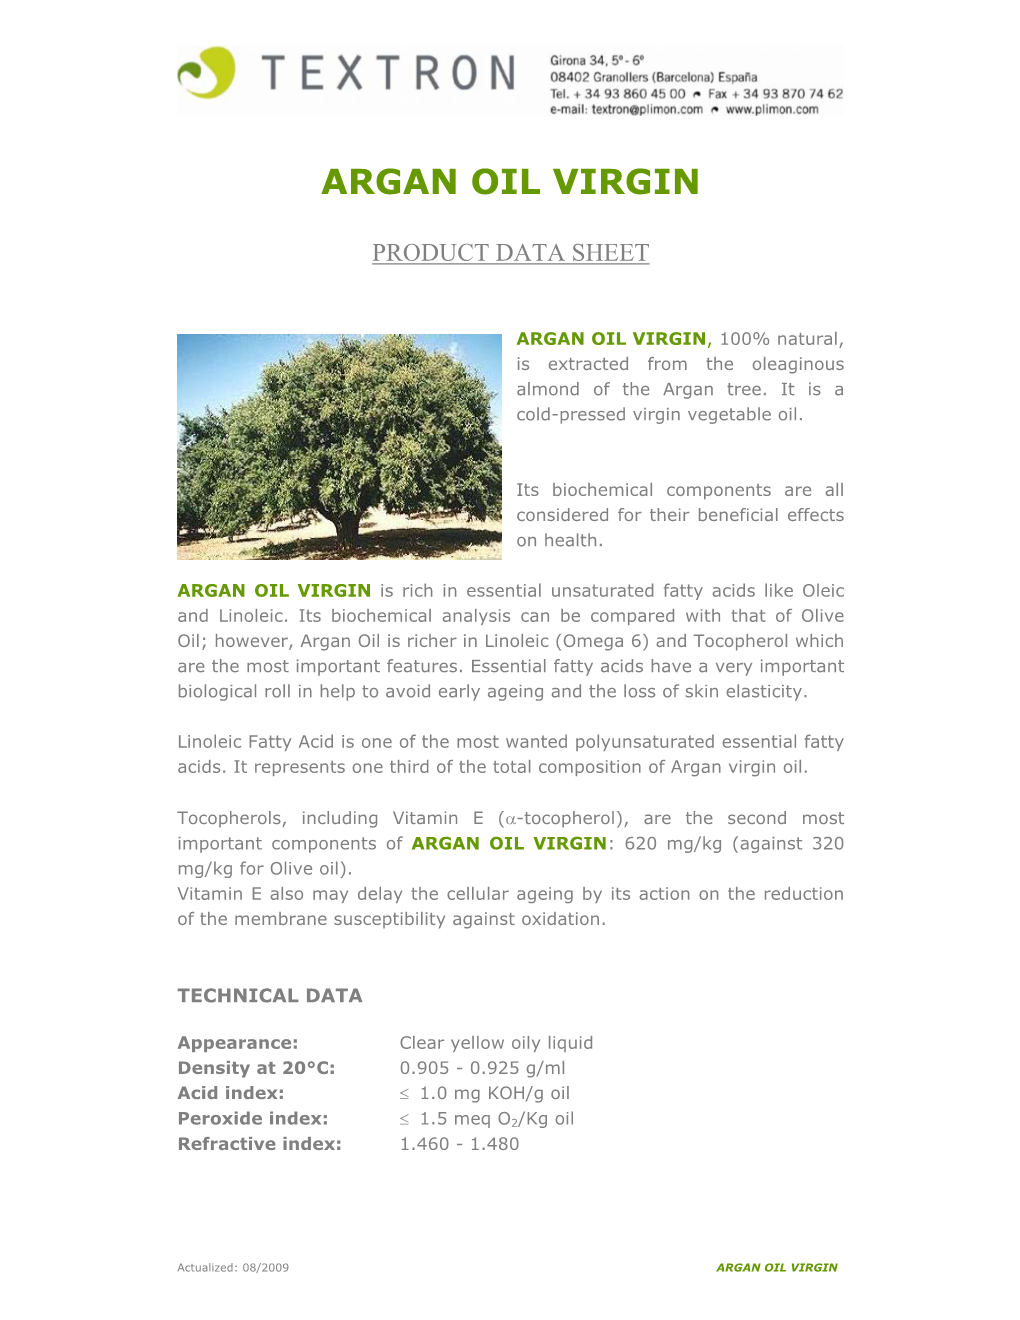 Argan Oil Virgin